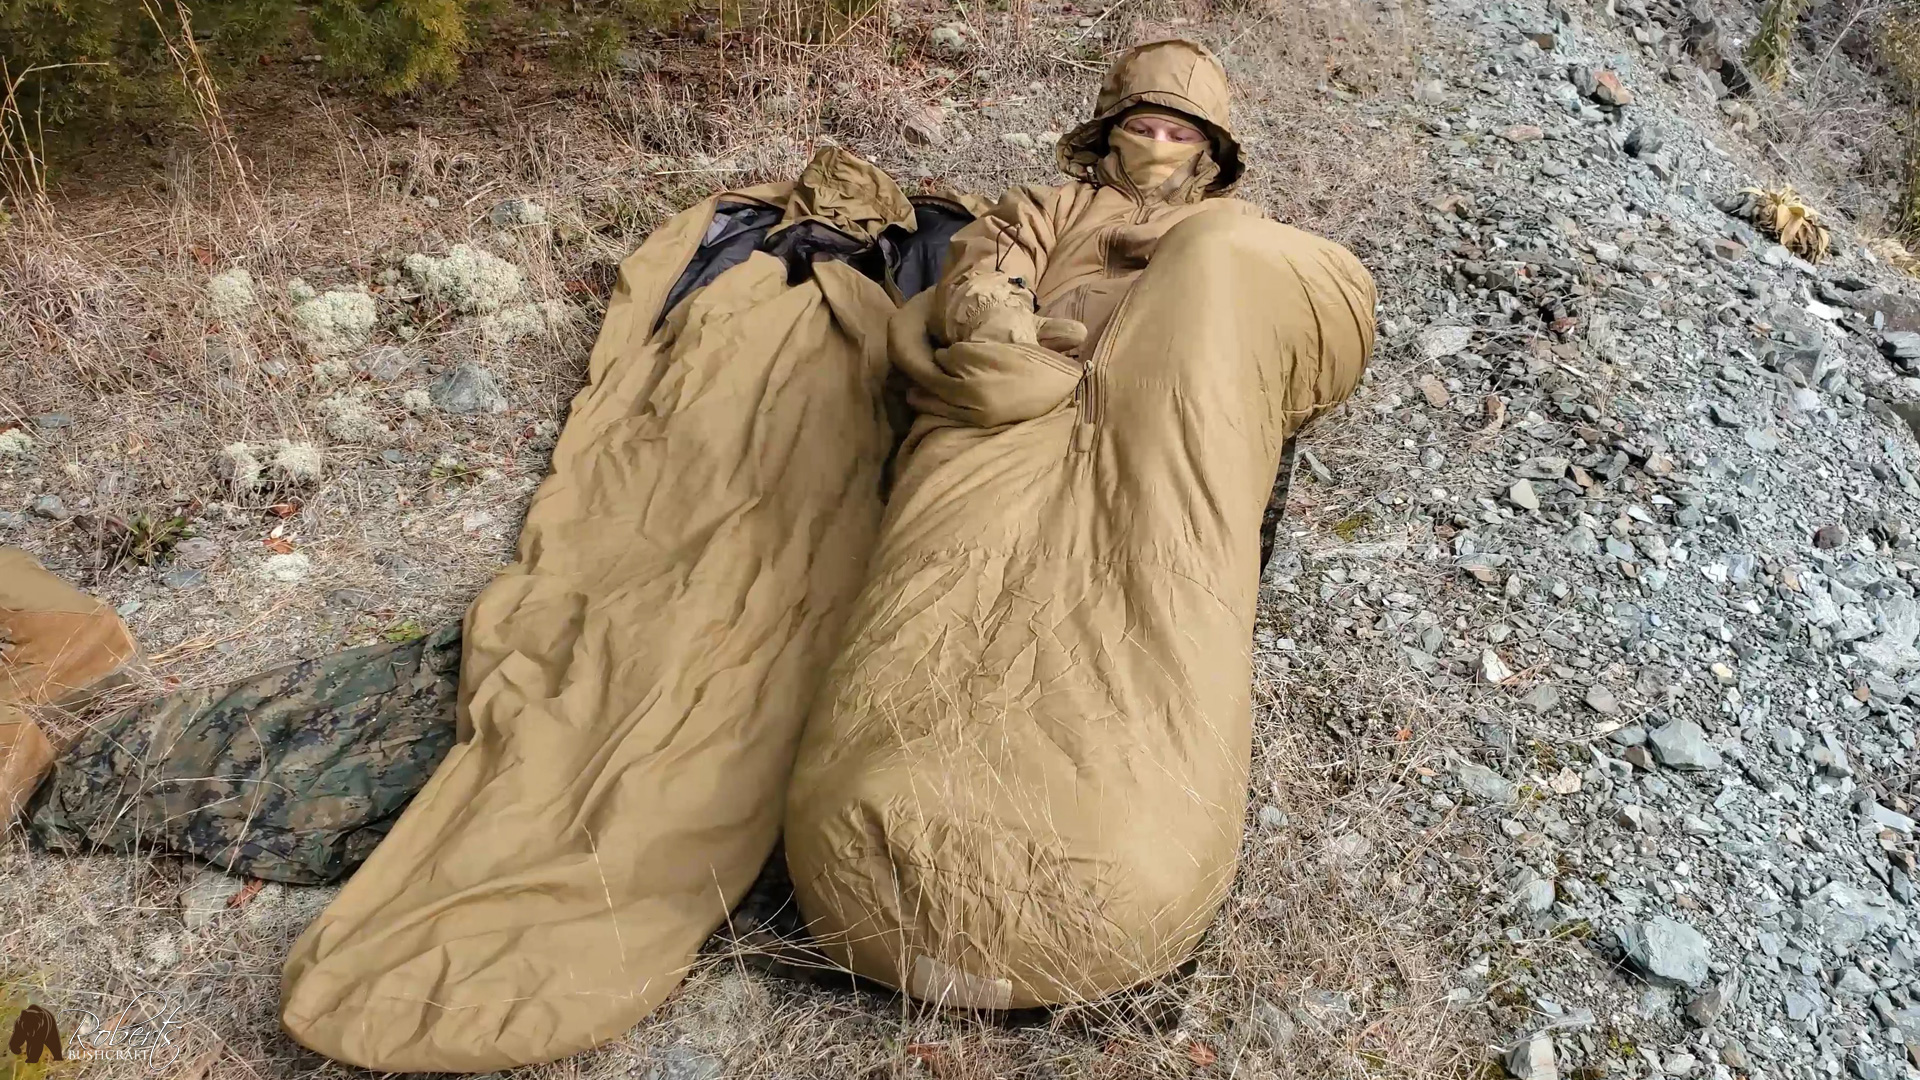 Military sleeping bag and base layers to keep you warm